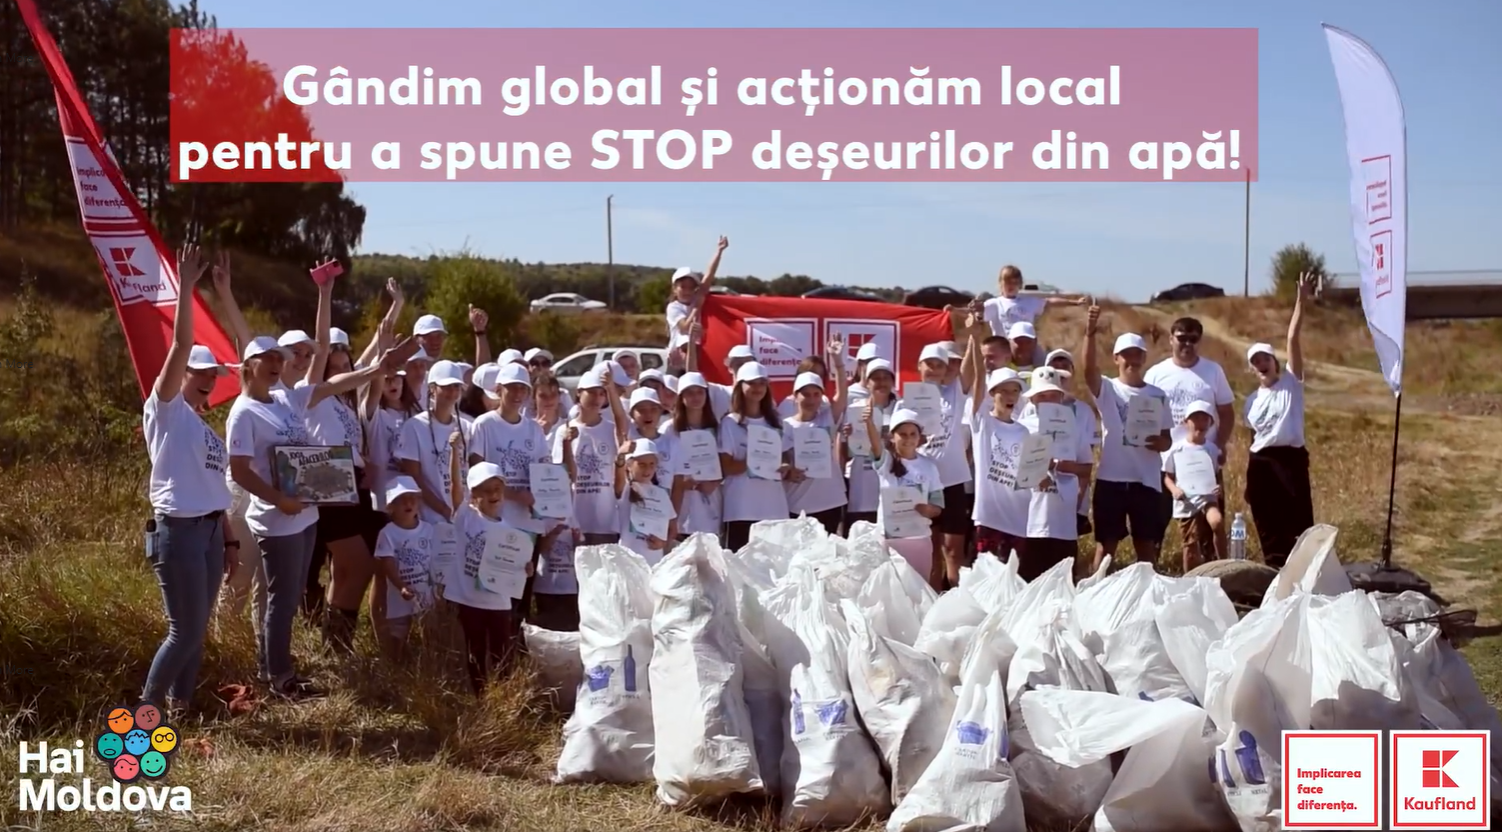 “River Clean Up” initiative – Kaufland Moldova